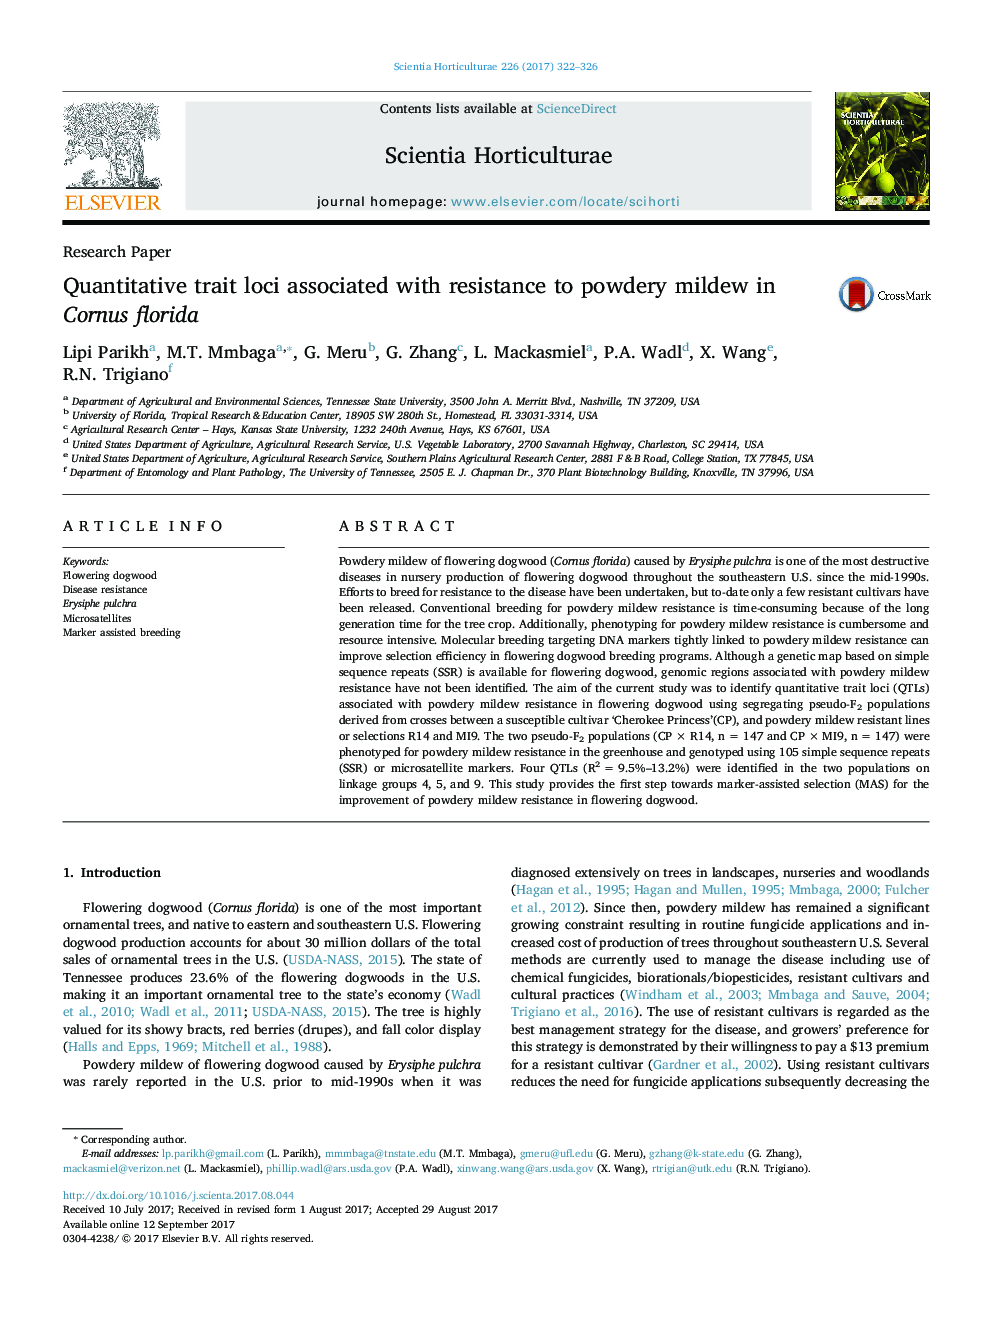 Research PaperQuantitative trait loci associated with resistance to powdery mildew in Cornus florida